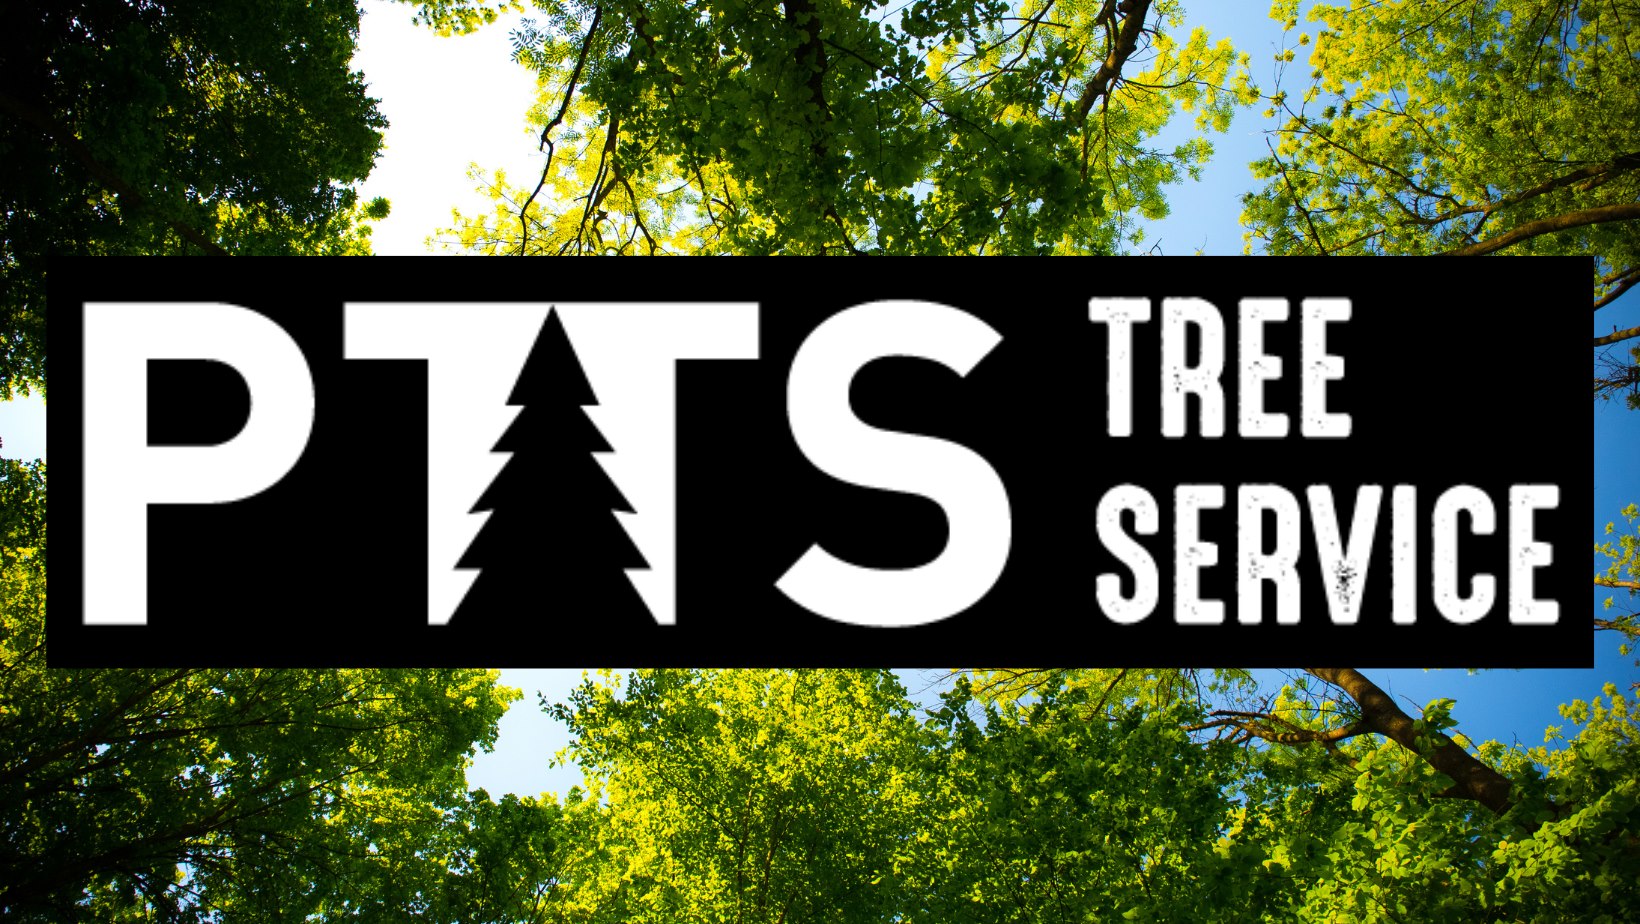 PTS Tree Service